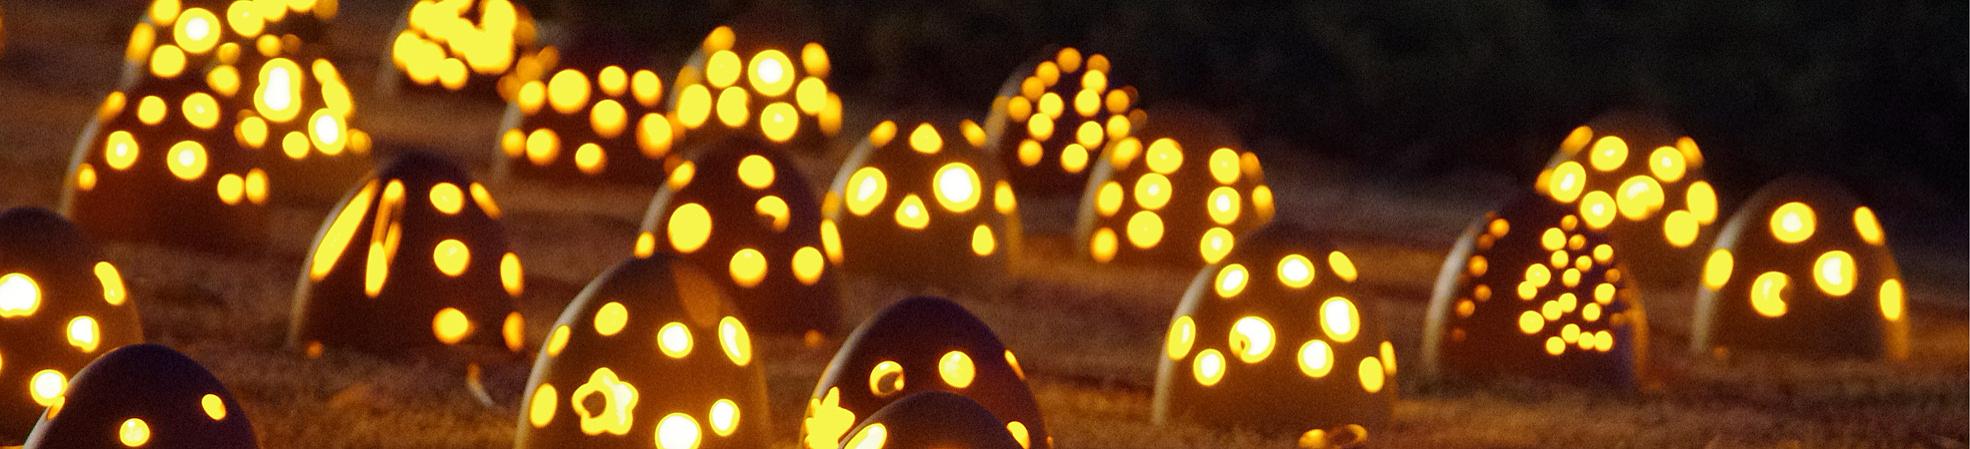 Obon Festival, the Ghost Festival in Japan